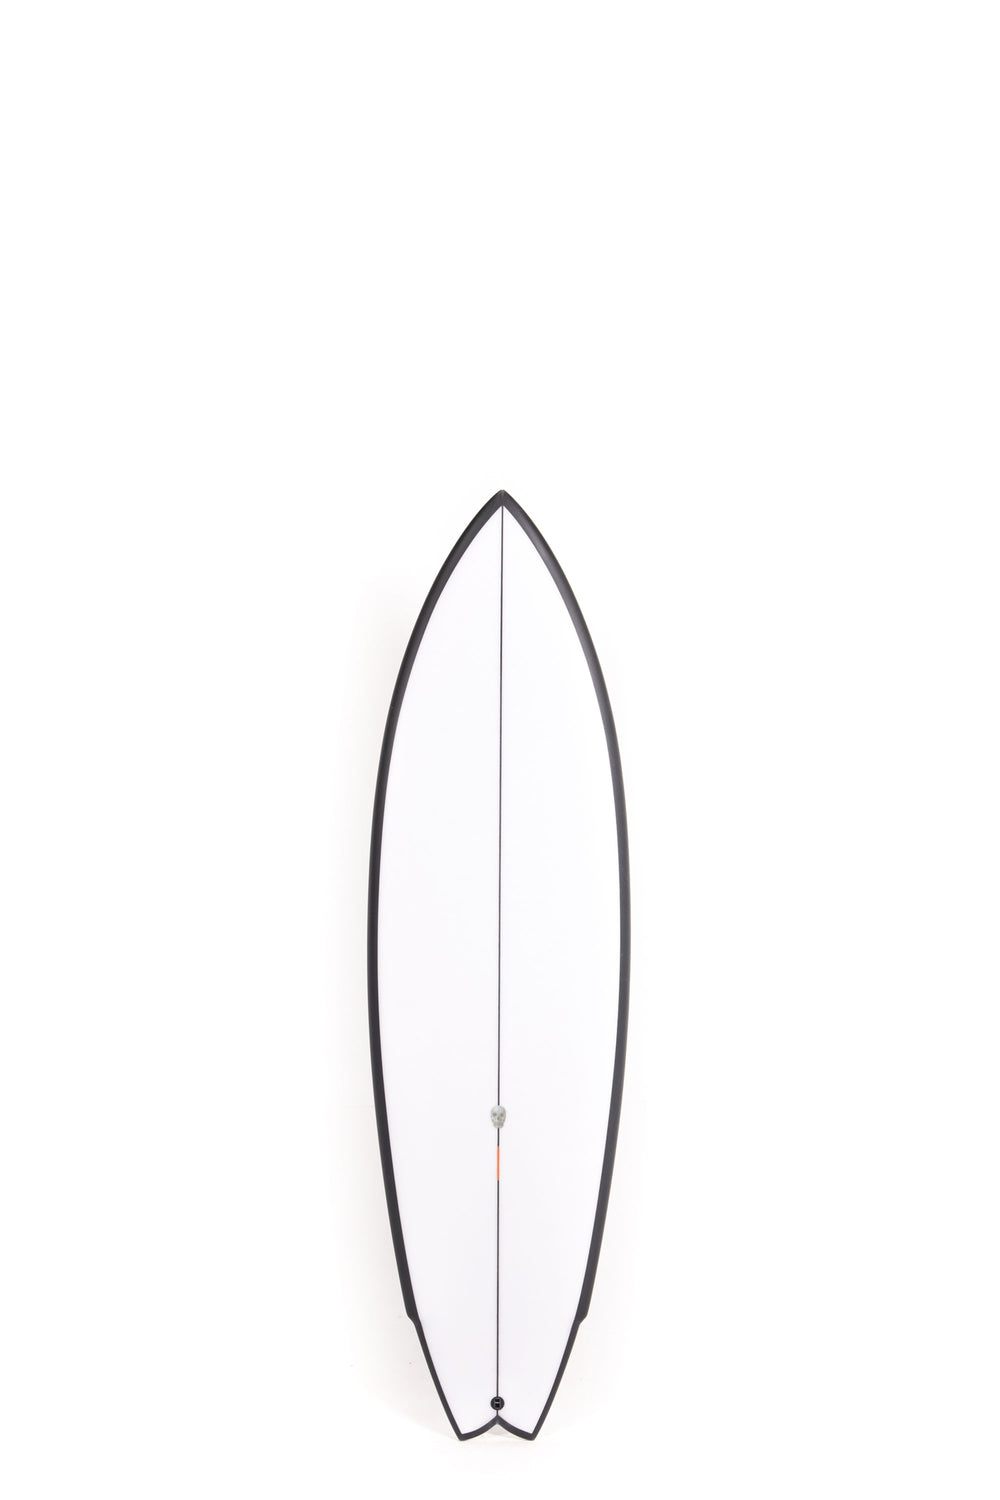 Pukas Surf Shop - Christenson Surfboards - LANE SPLITTER SWALLOW - 6'0